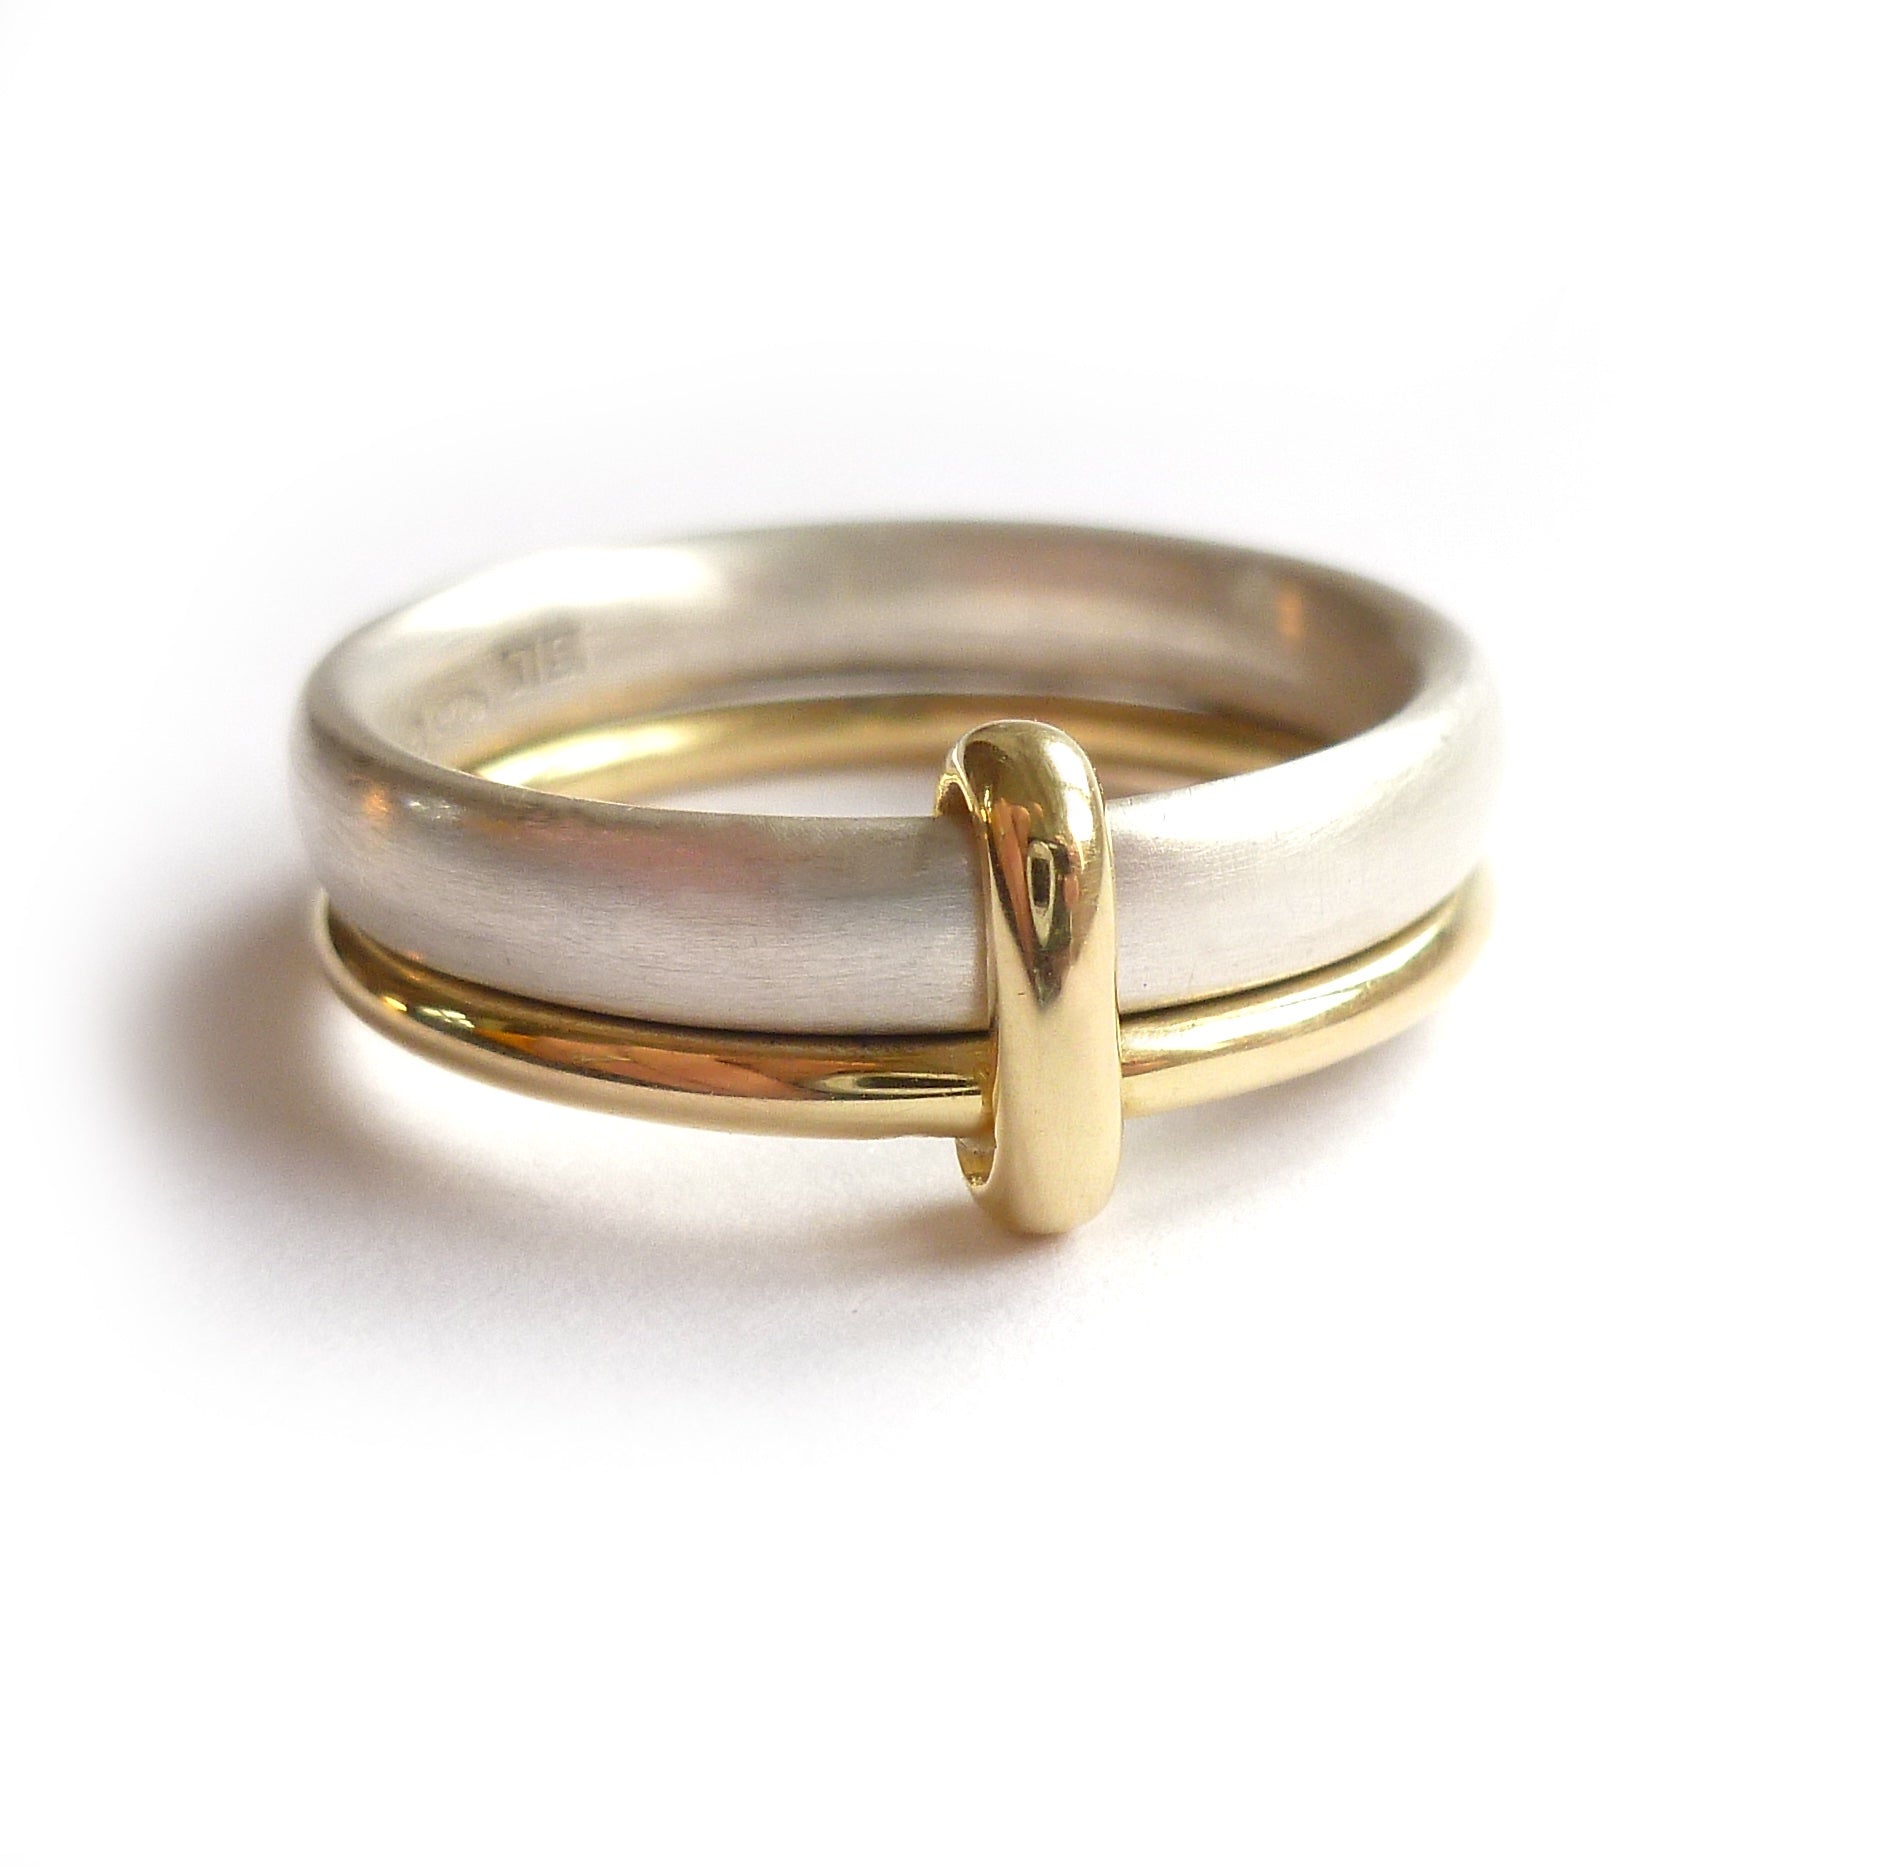 Pin by Anastasia on Nice... | Gold ring designs, Ring trends, Lotus ring